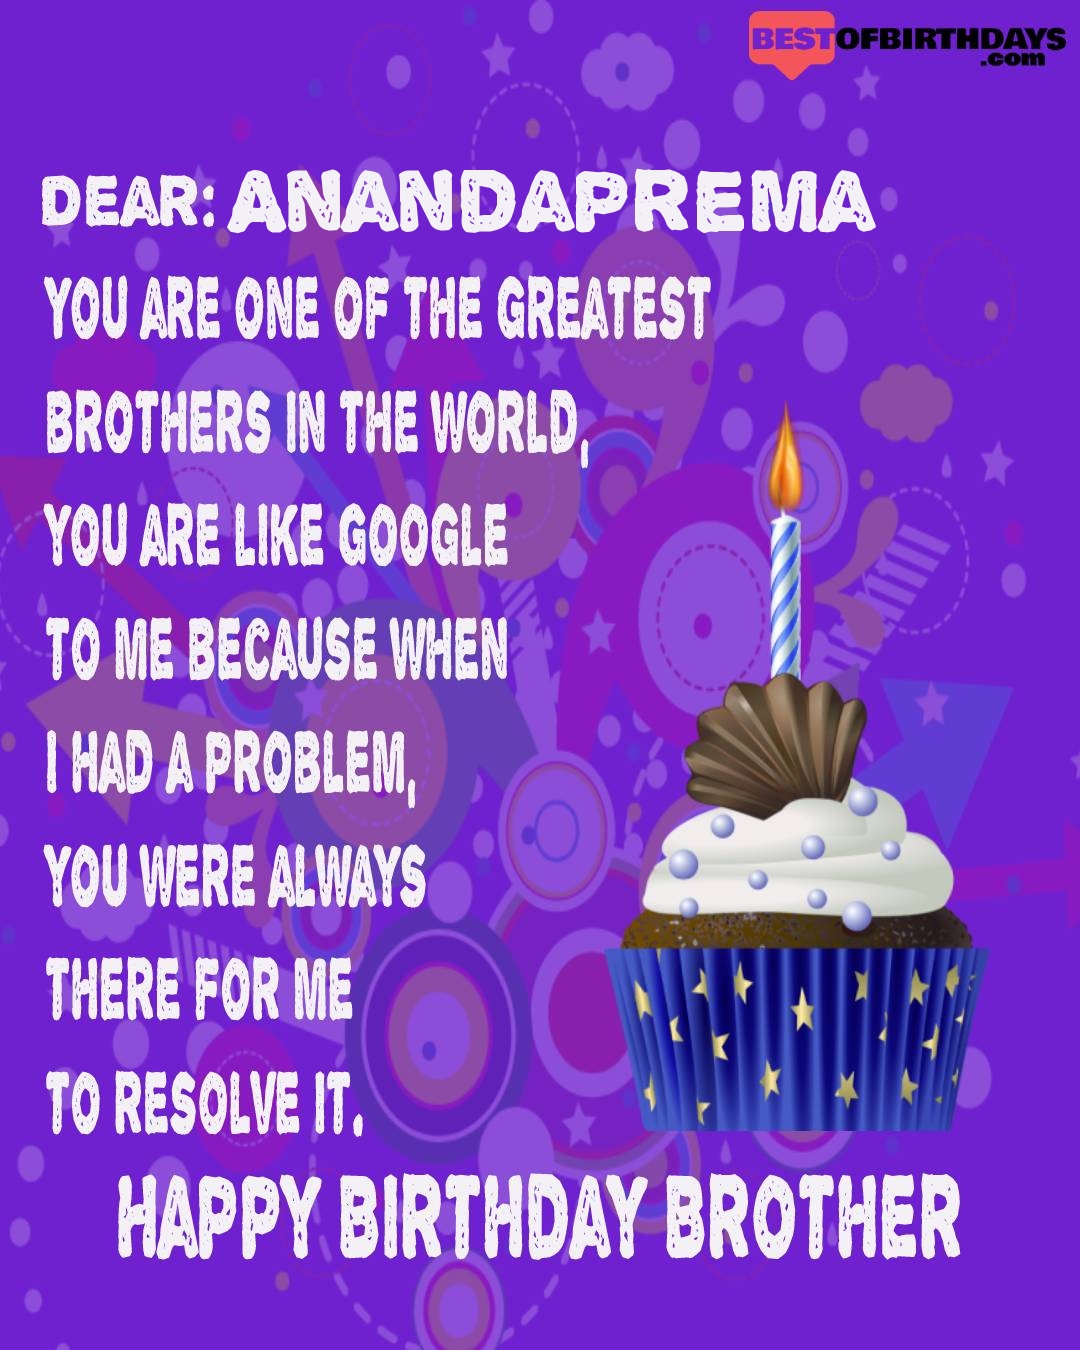 Happy birthday anandaprema bhai brother bro